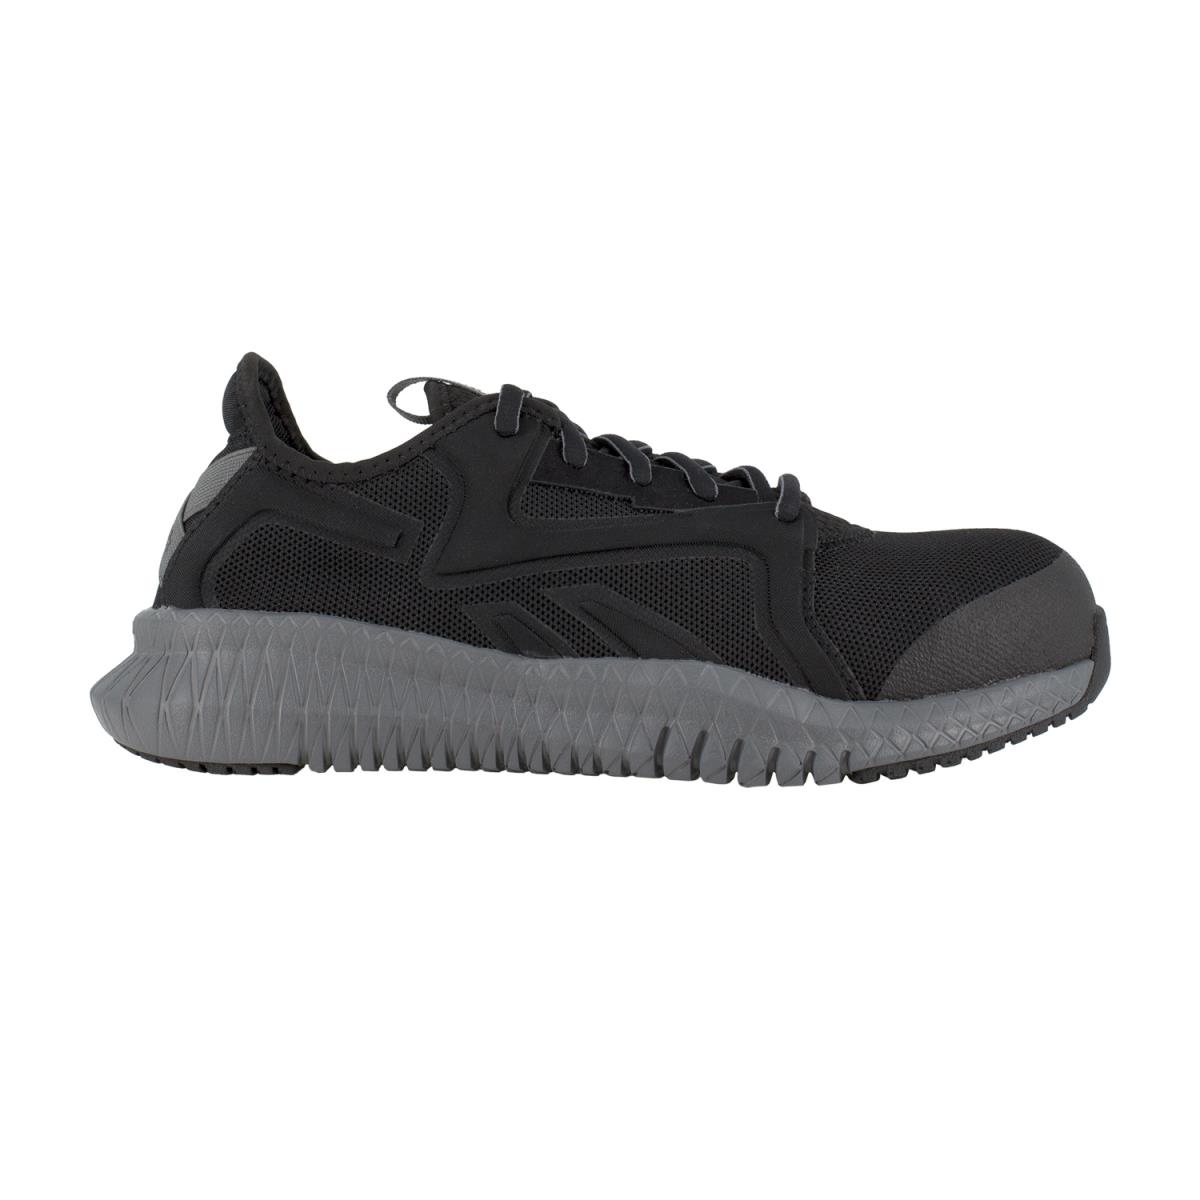 Reebok Womens Black/grey Nylon Work Shoes Flexagon 3.0 CT M